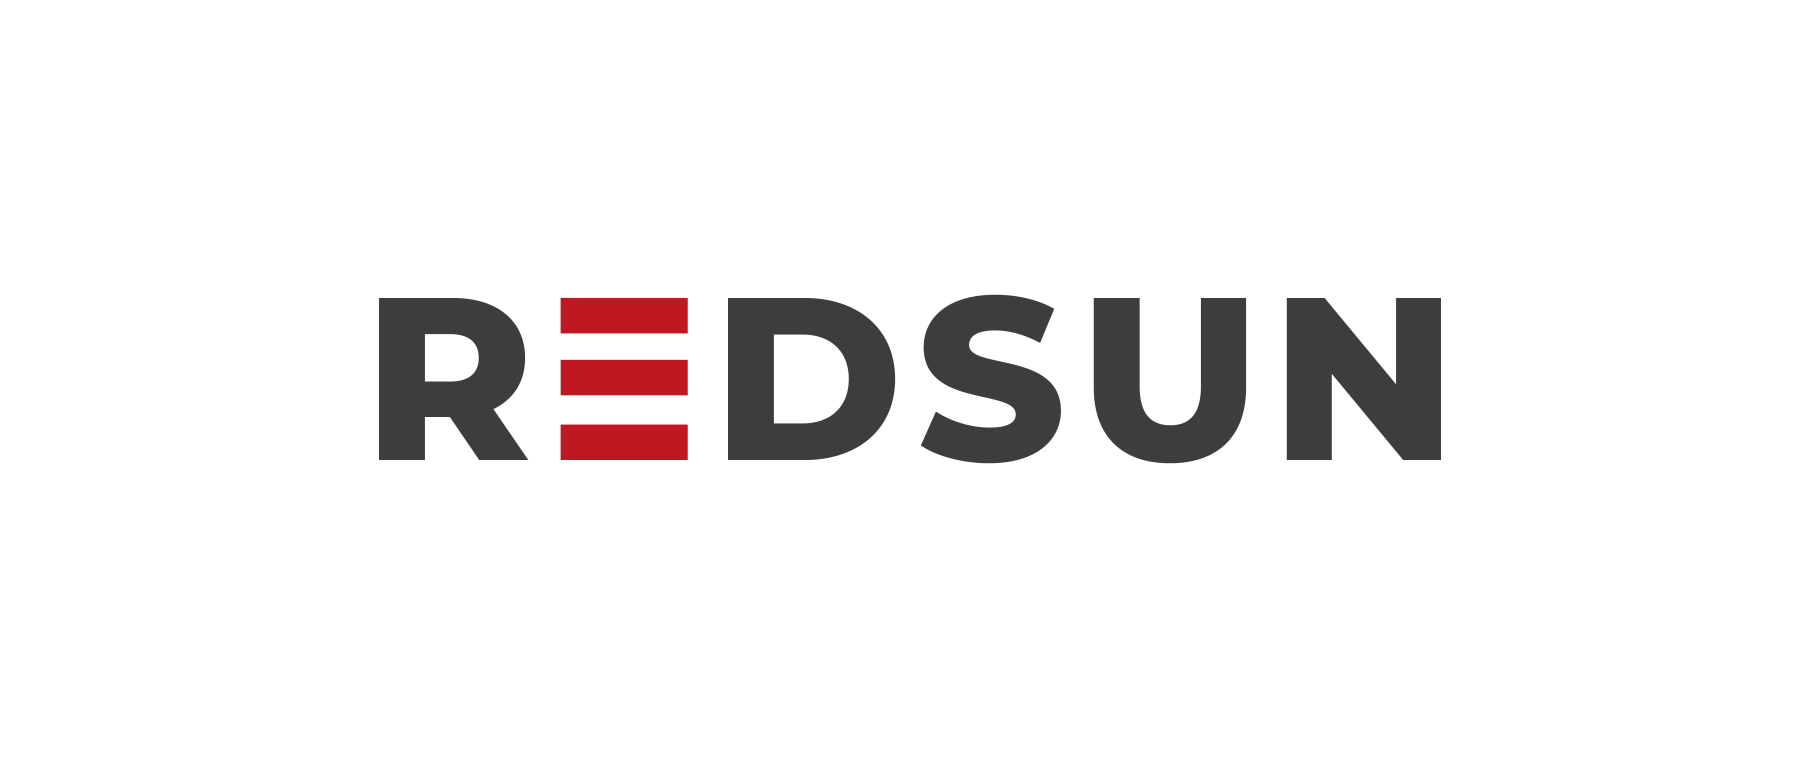 Redsun-logo